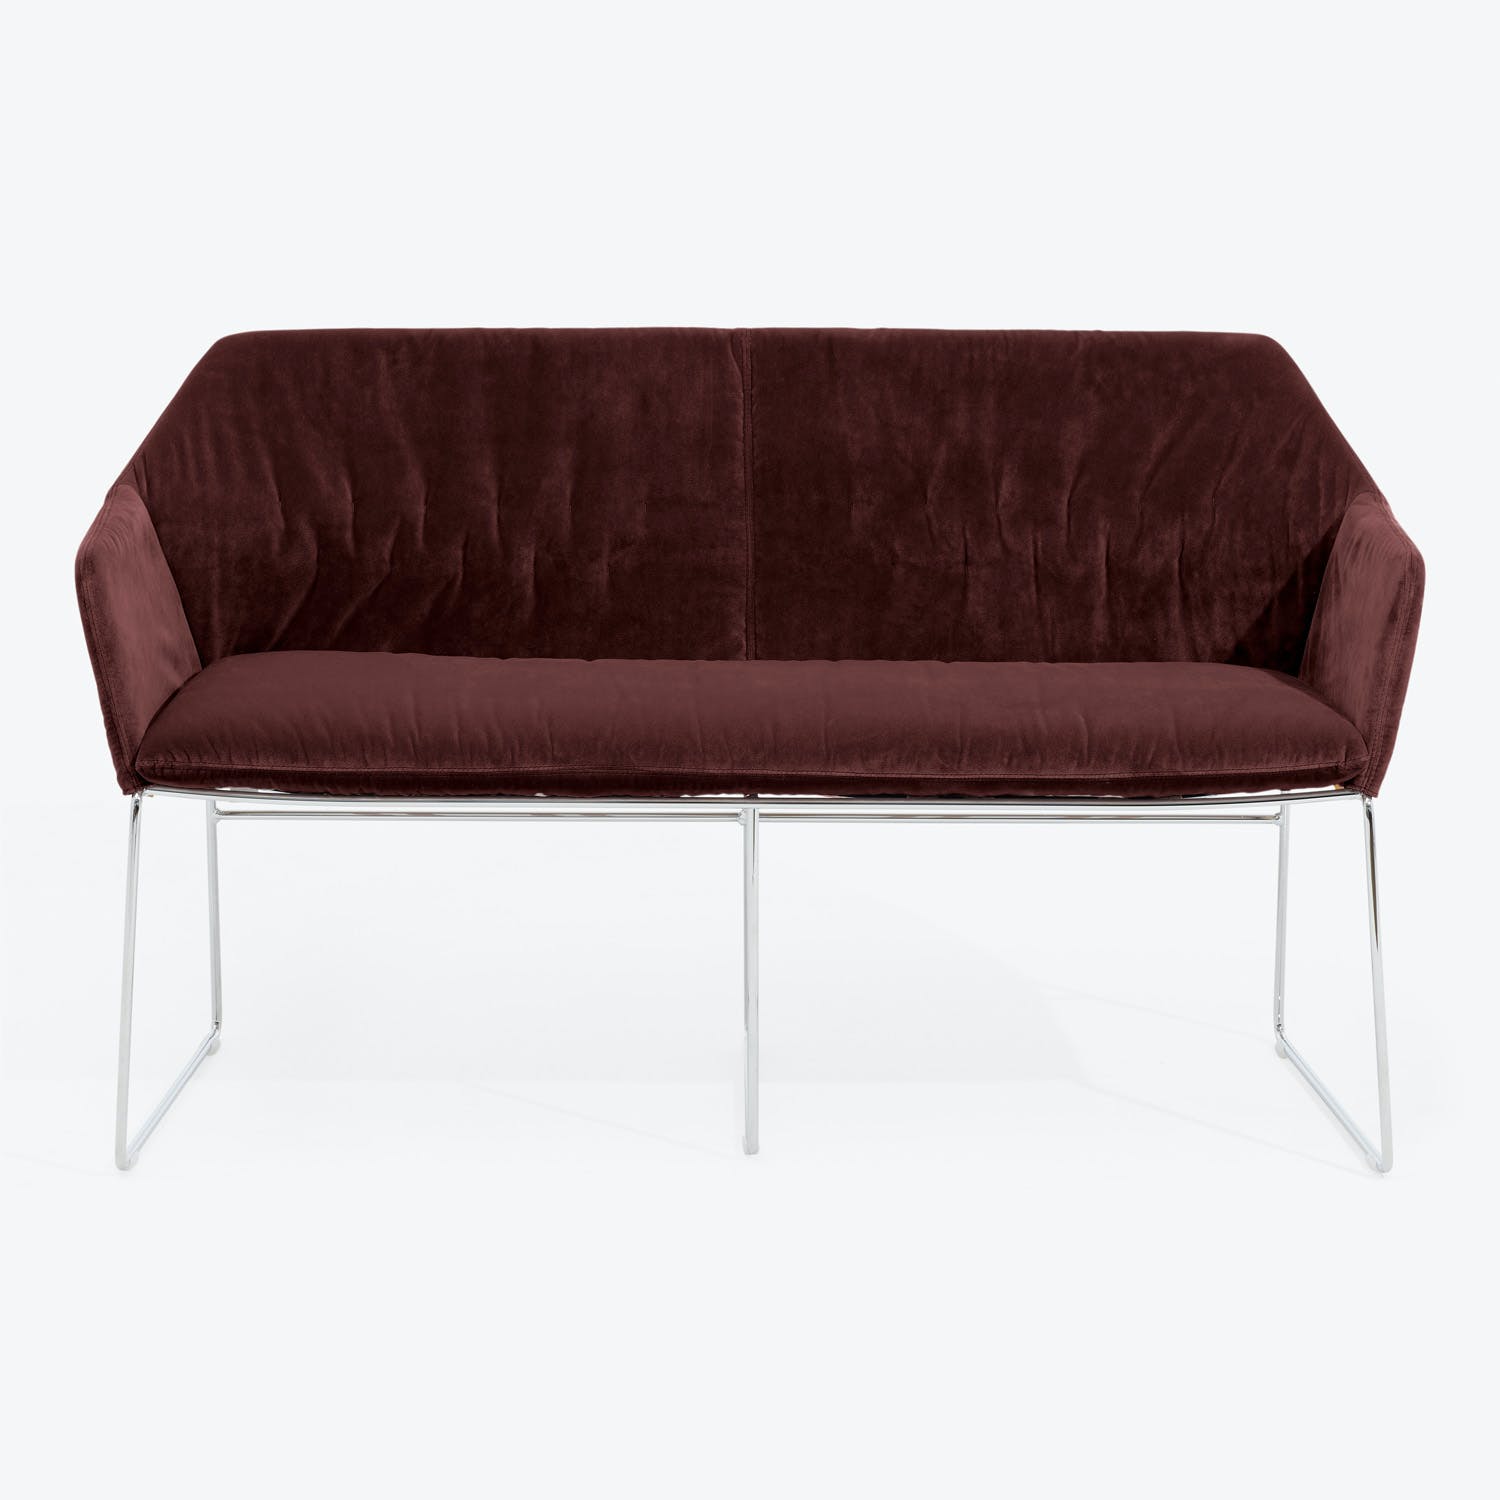 Luxurious burgundy velvet sofa with sleek chrome legs exudes elegance.